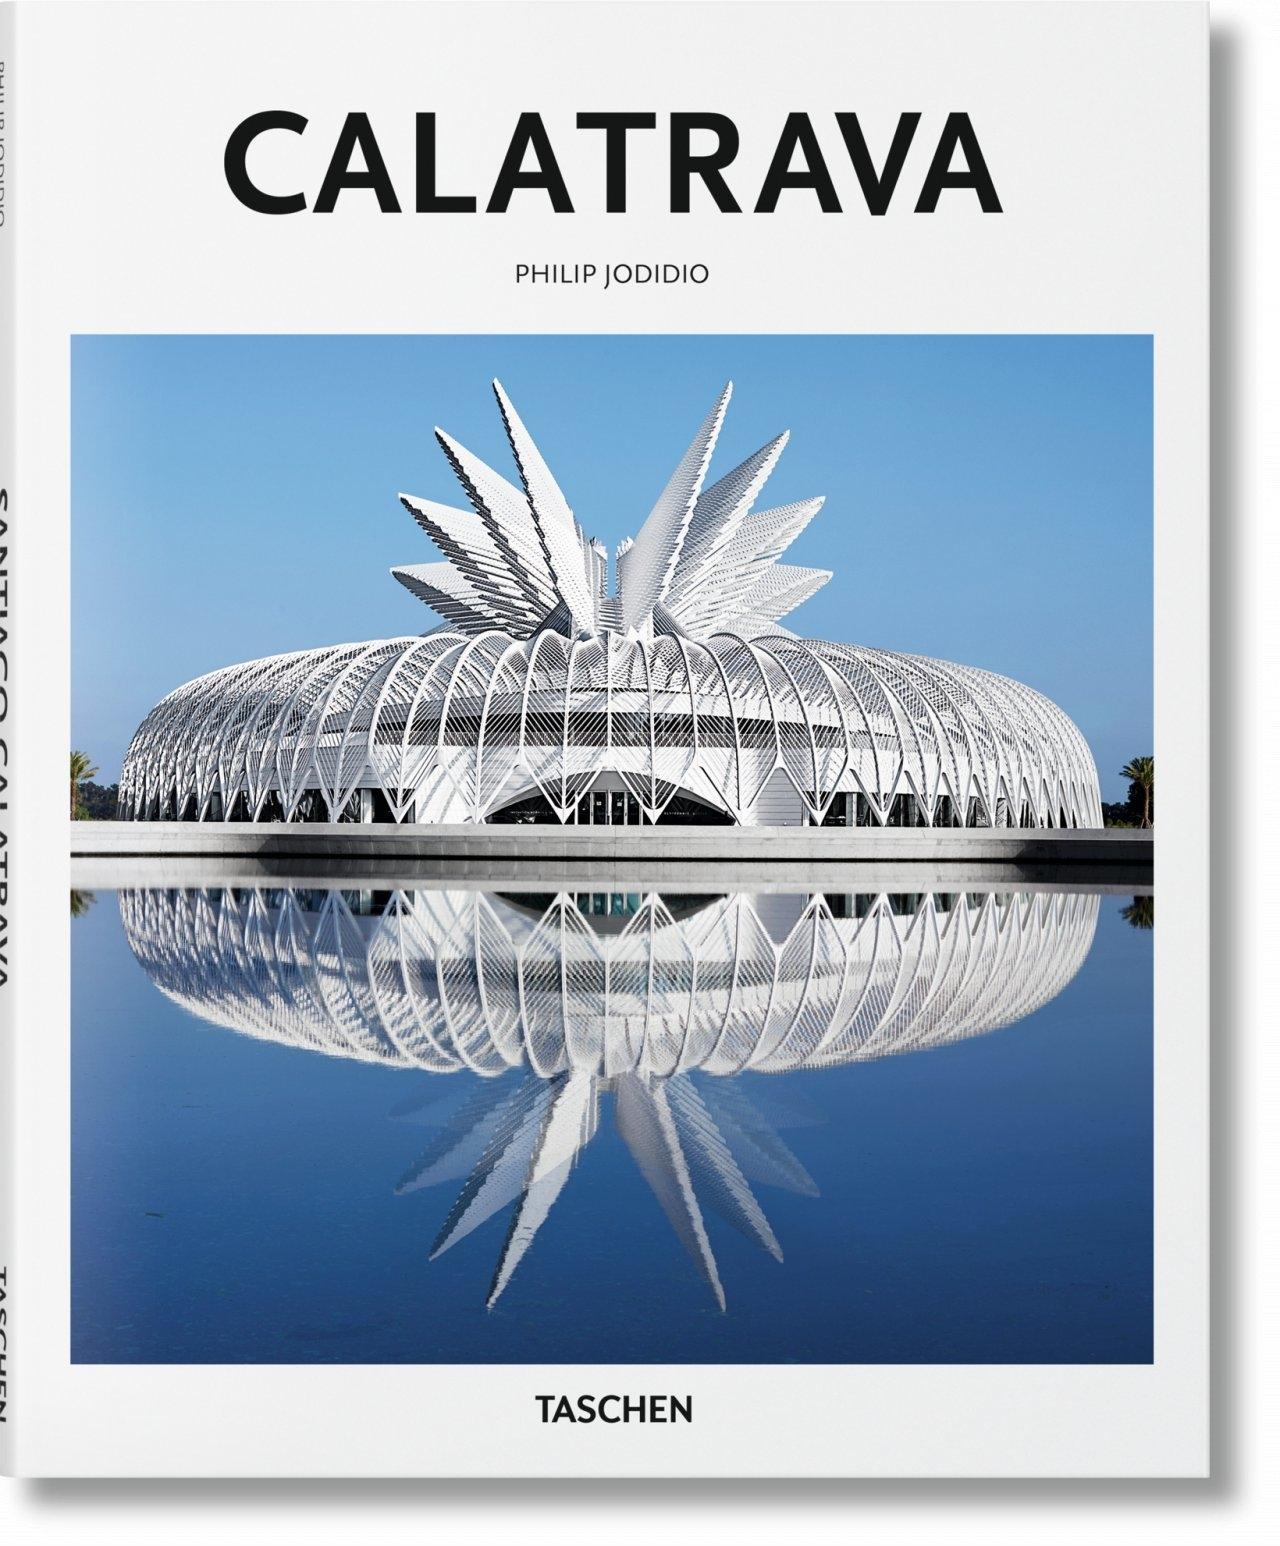 CALATRAVA: SANTIAGO CALATRAVA "ARQUITECTO, INGENIERO, ARTISTA". 